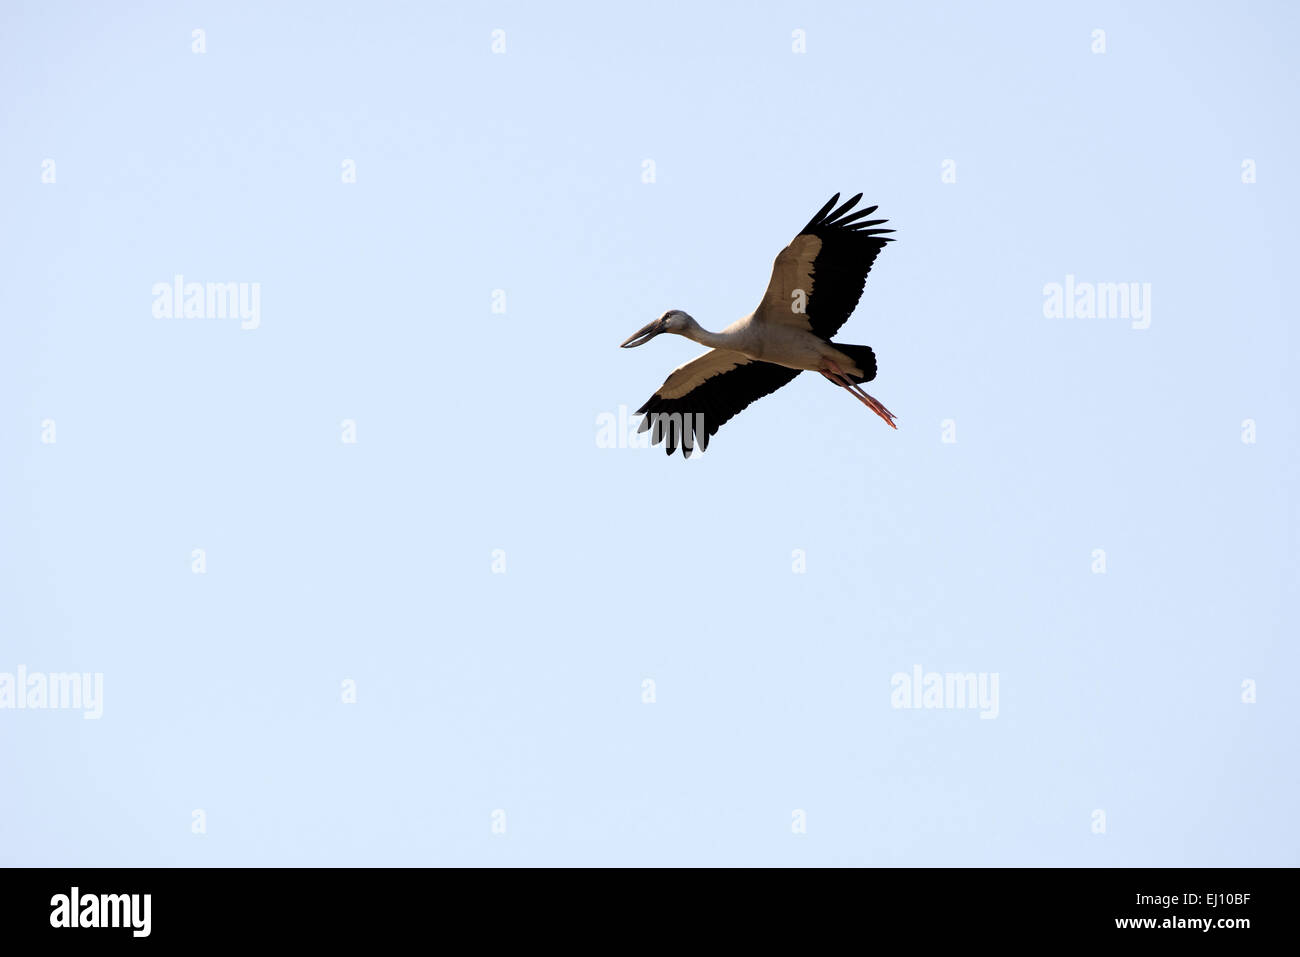 Asian openbill, flying, Thailand, Bec, ouvert indien, bird, wader, anastomus oscitans, flight Stock Photo